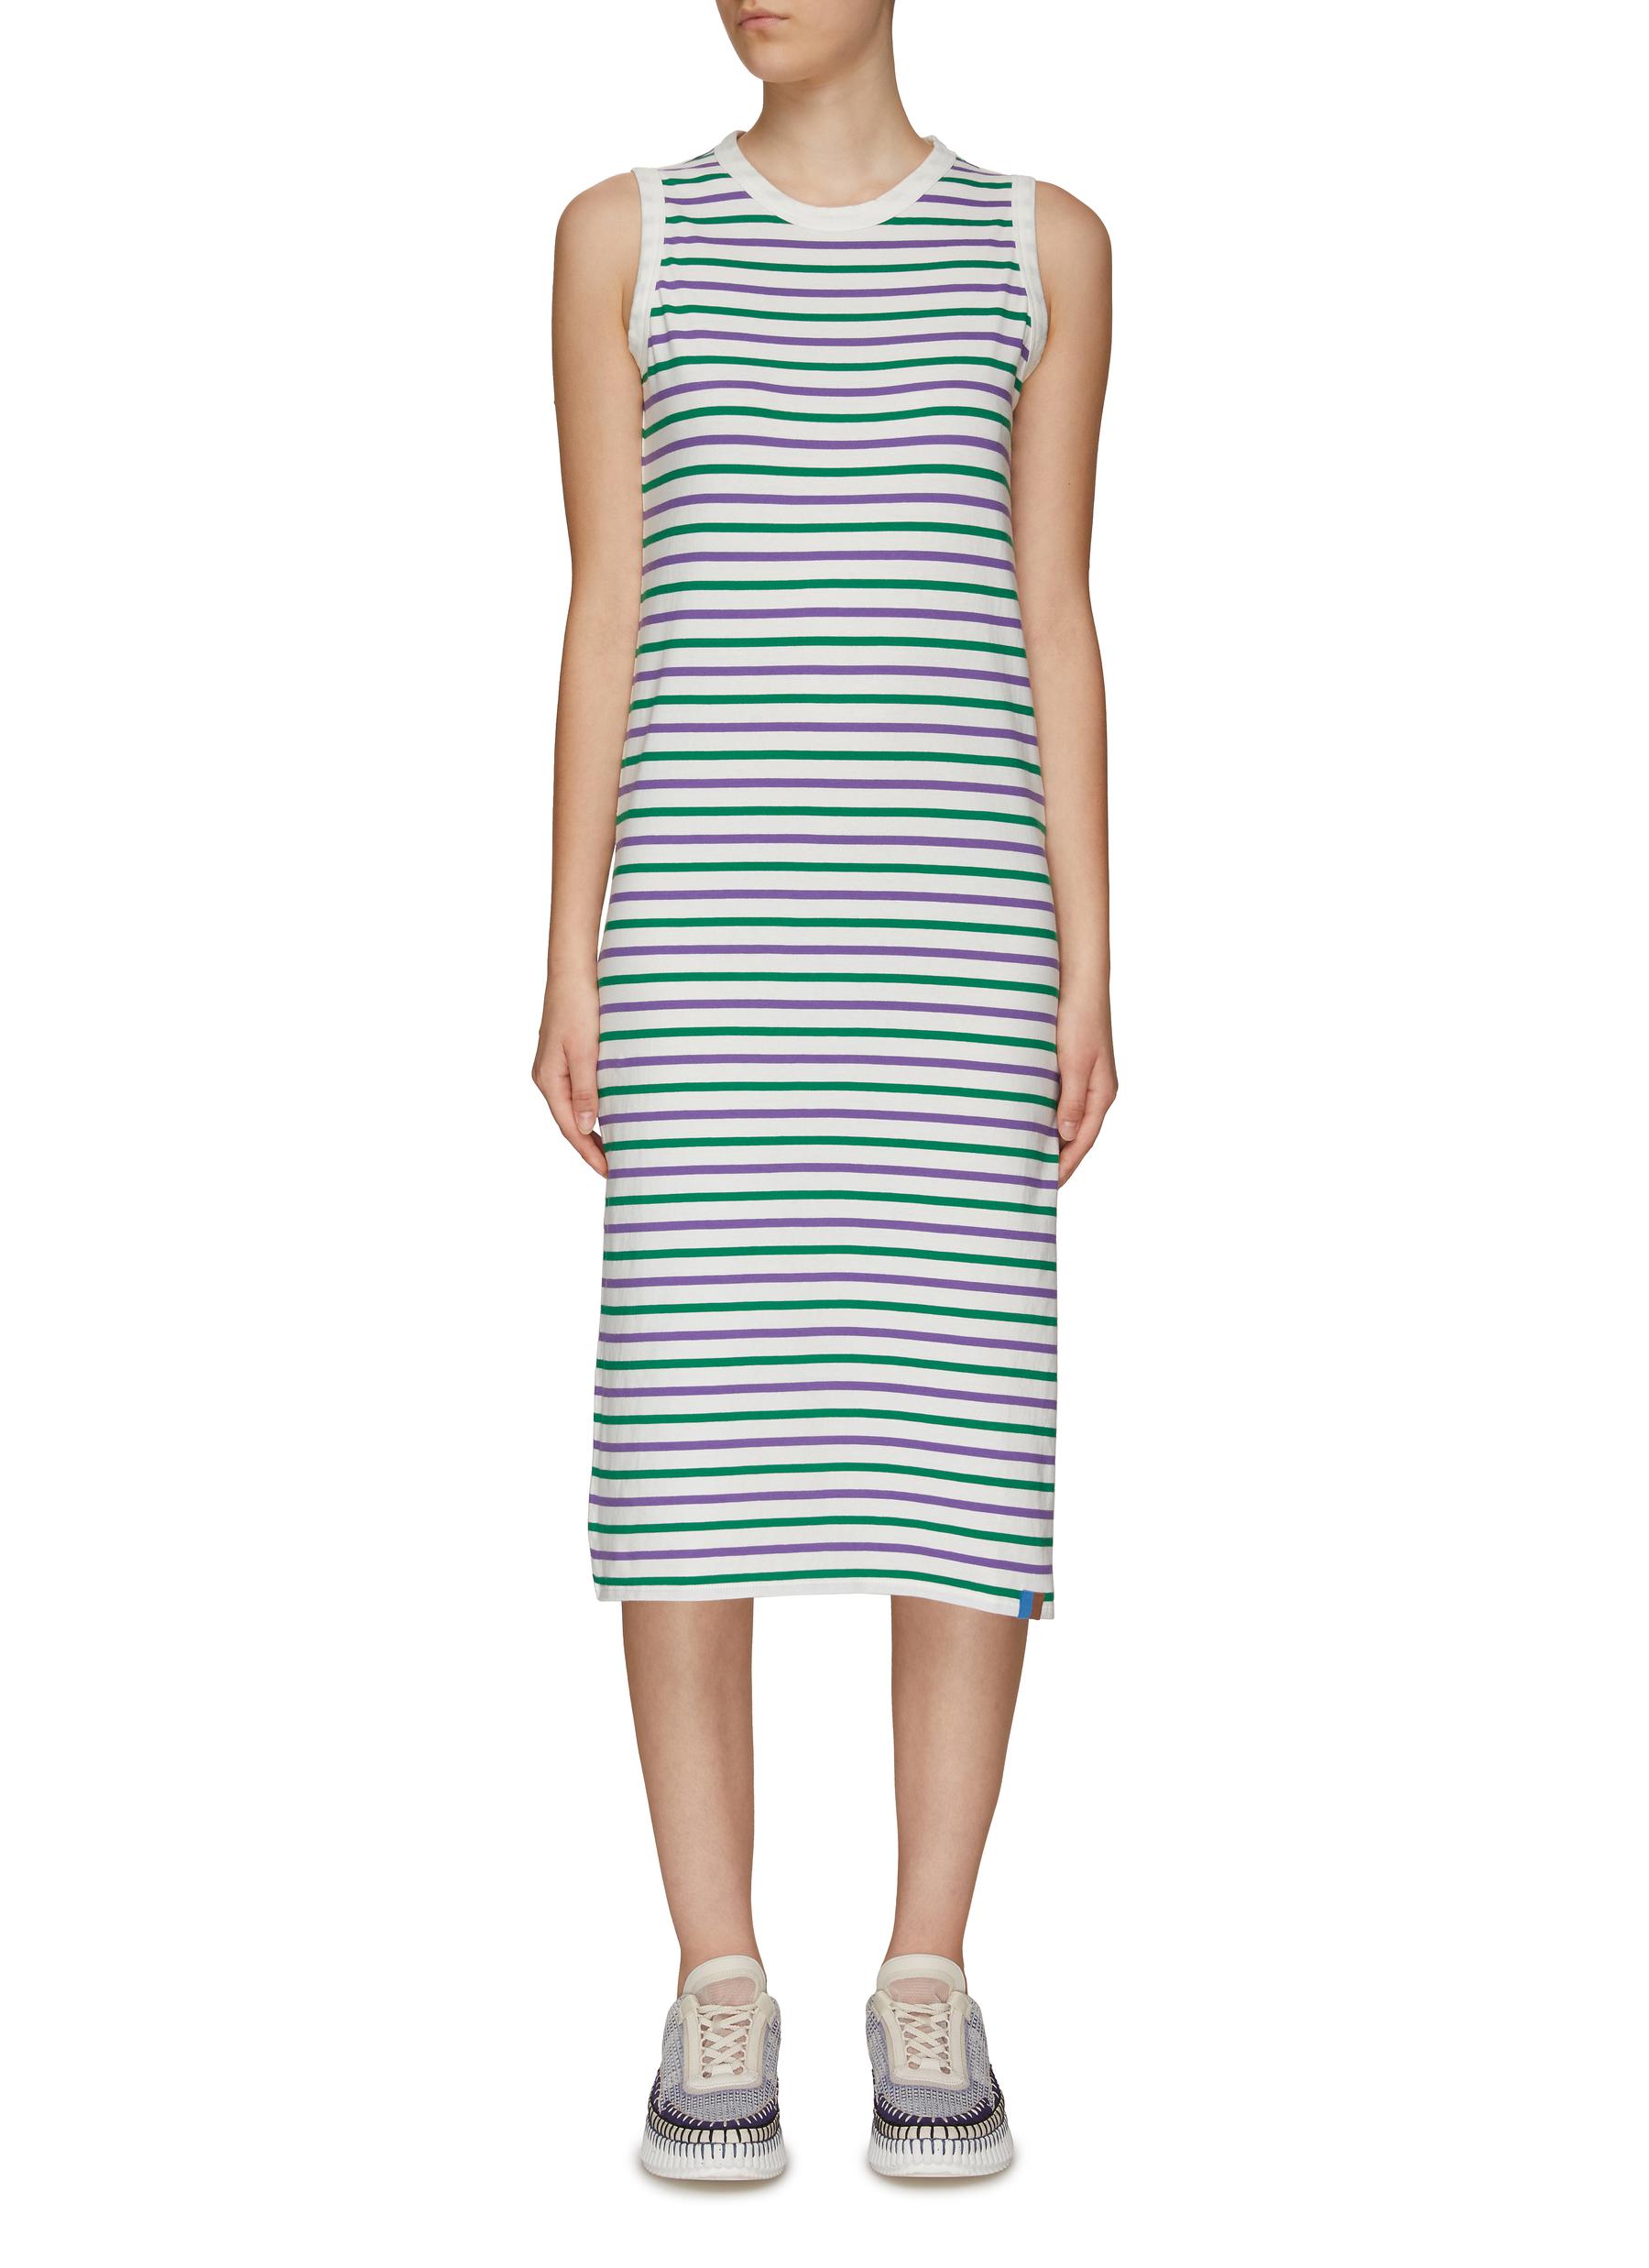 KULE Multi-colour Striped Cotton Tank Dress